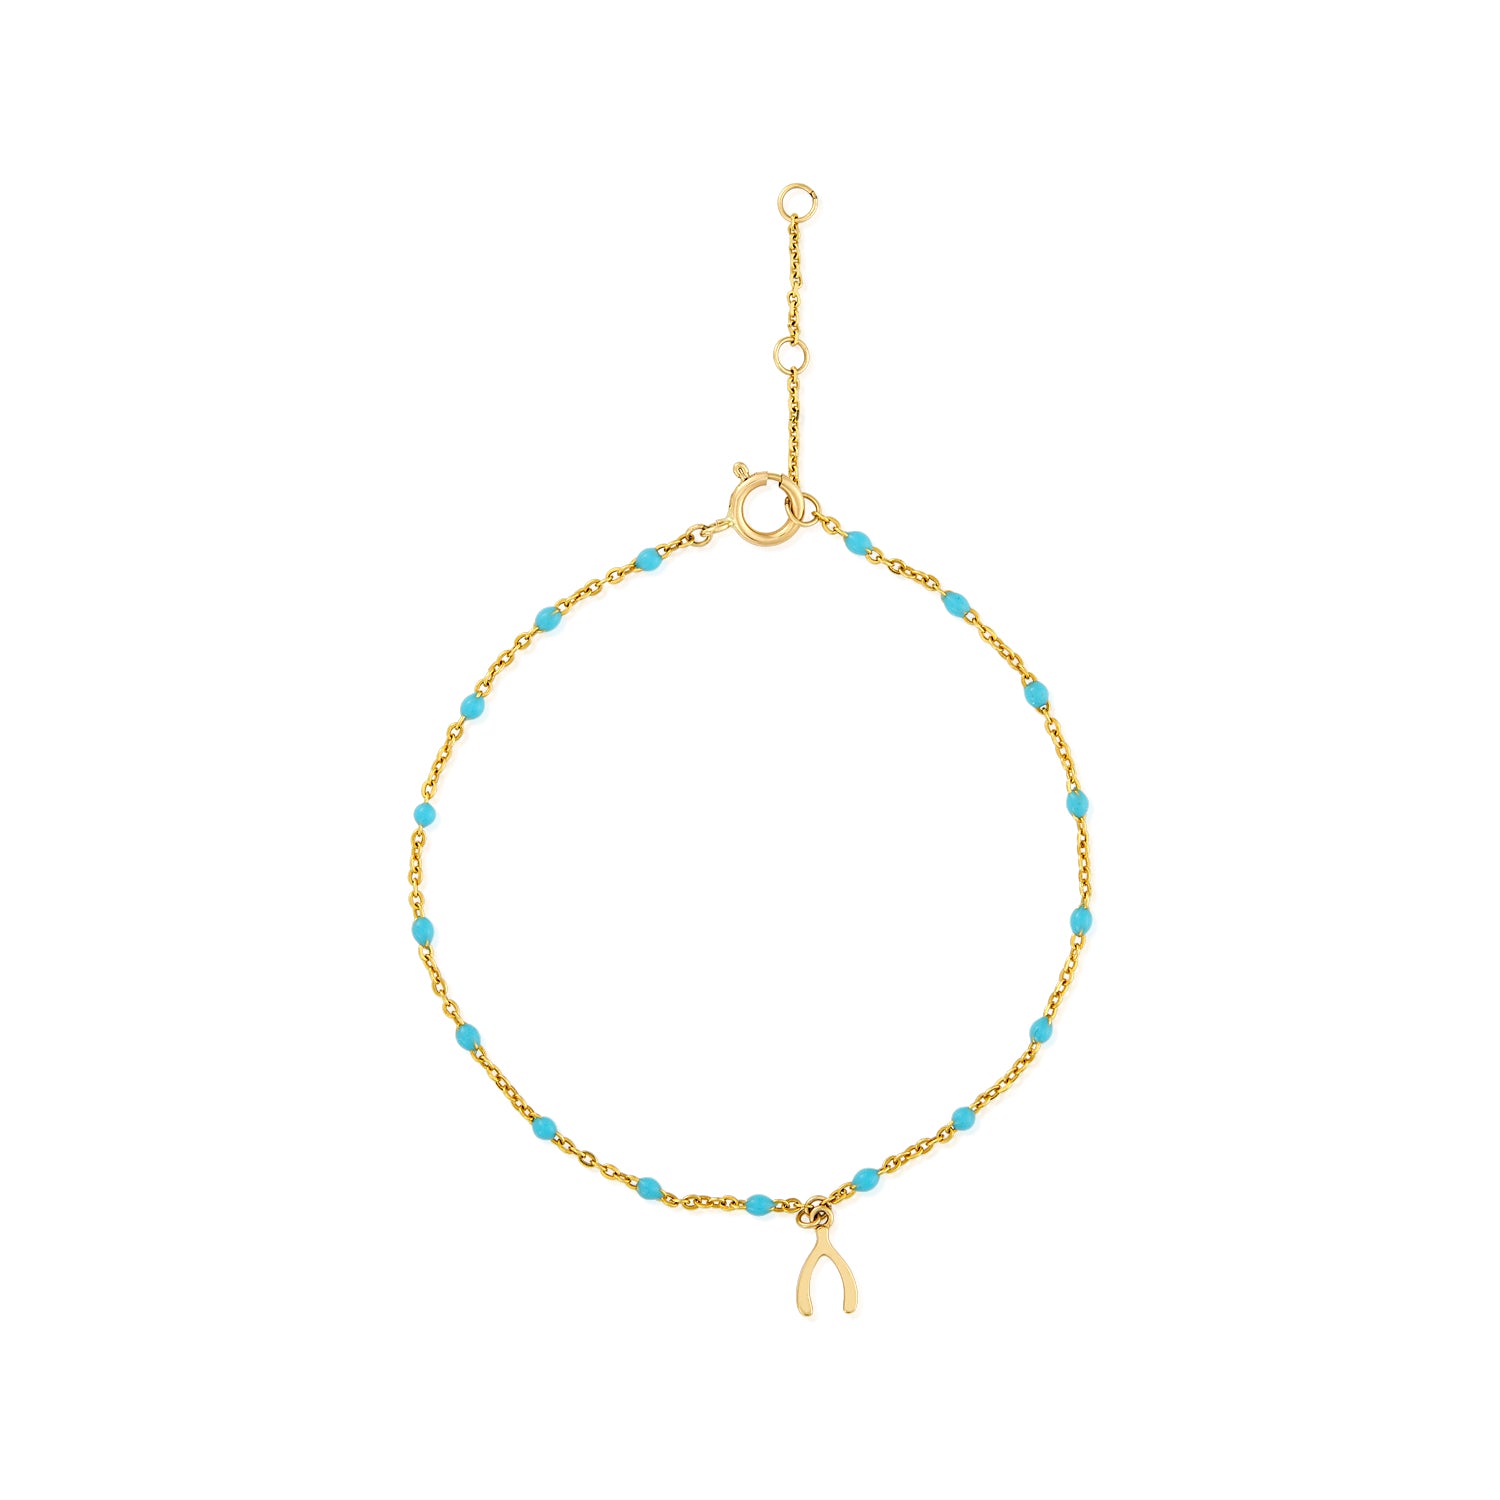 Turquoise Bracelet With Wishbone Charm in 14k